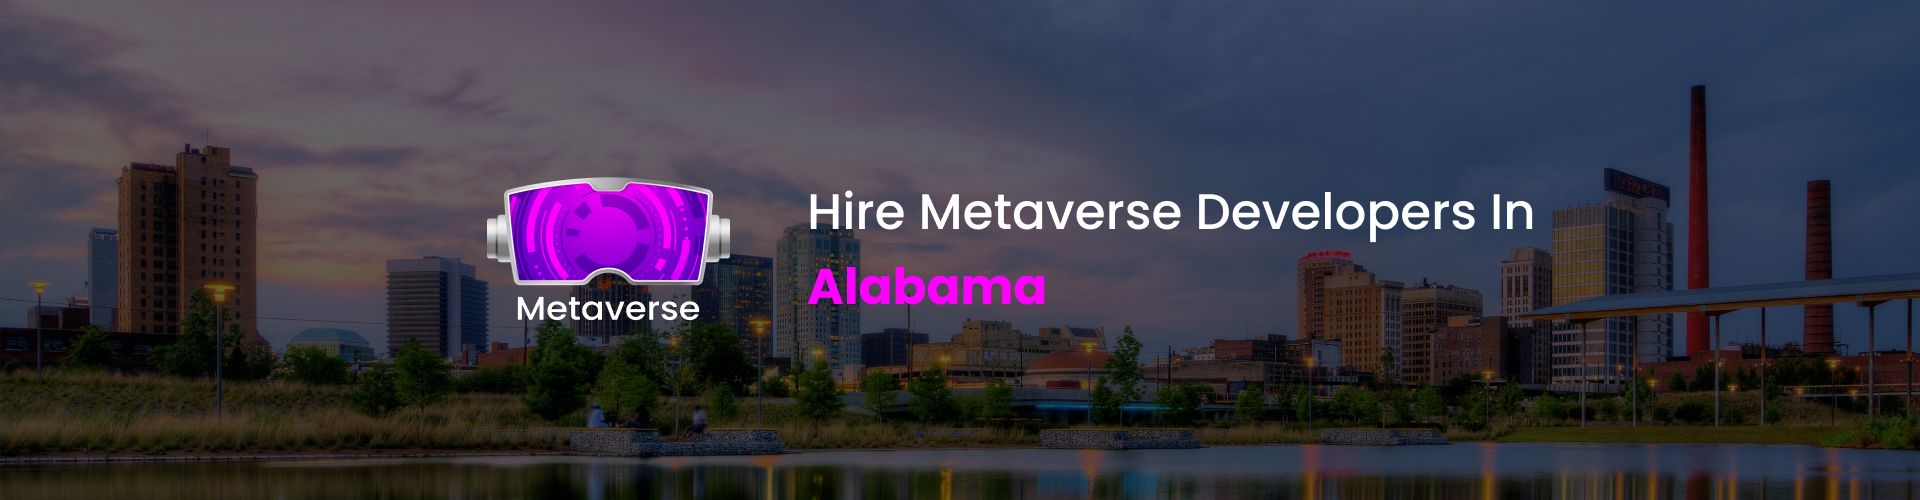 hire metaverse developers in alabama